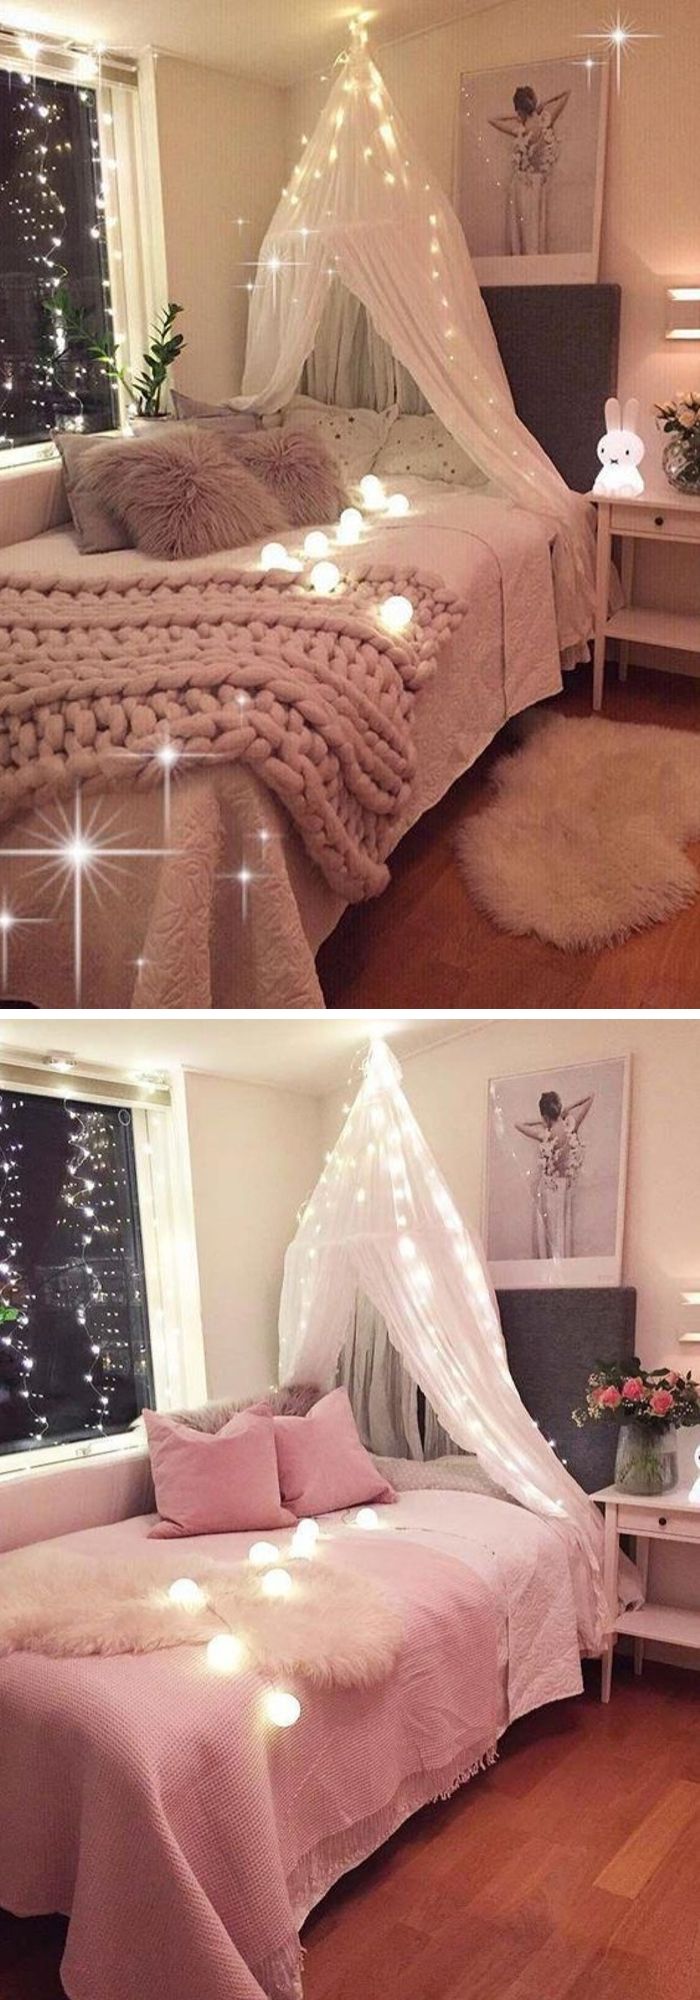 21 bedroom lighting ideas